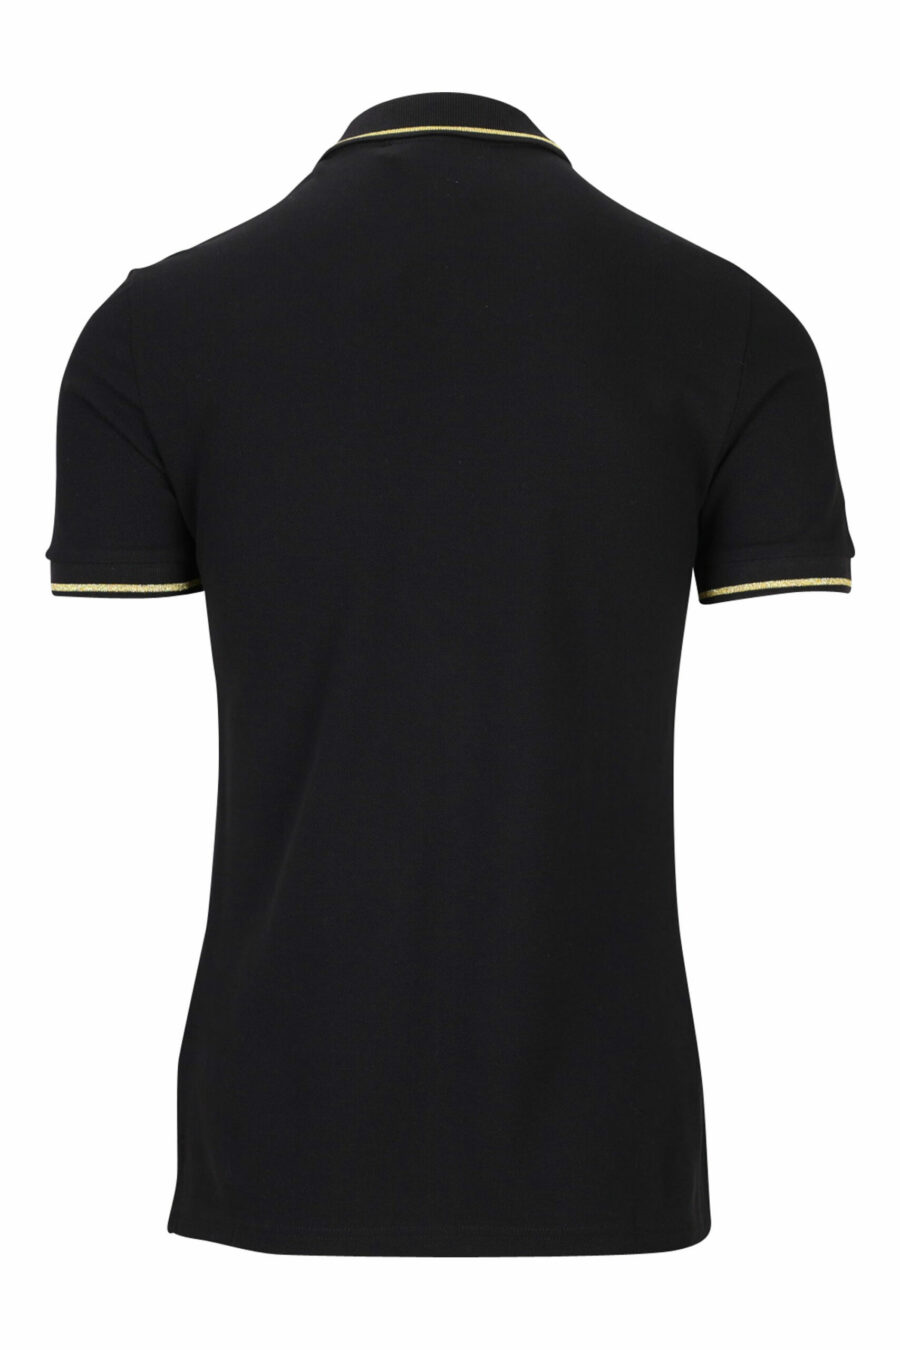 Schwarzes Poloshirt mit goldenem Mini-Logo - 8052019467598 1 skaliert